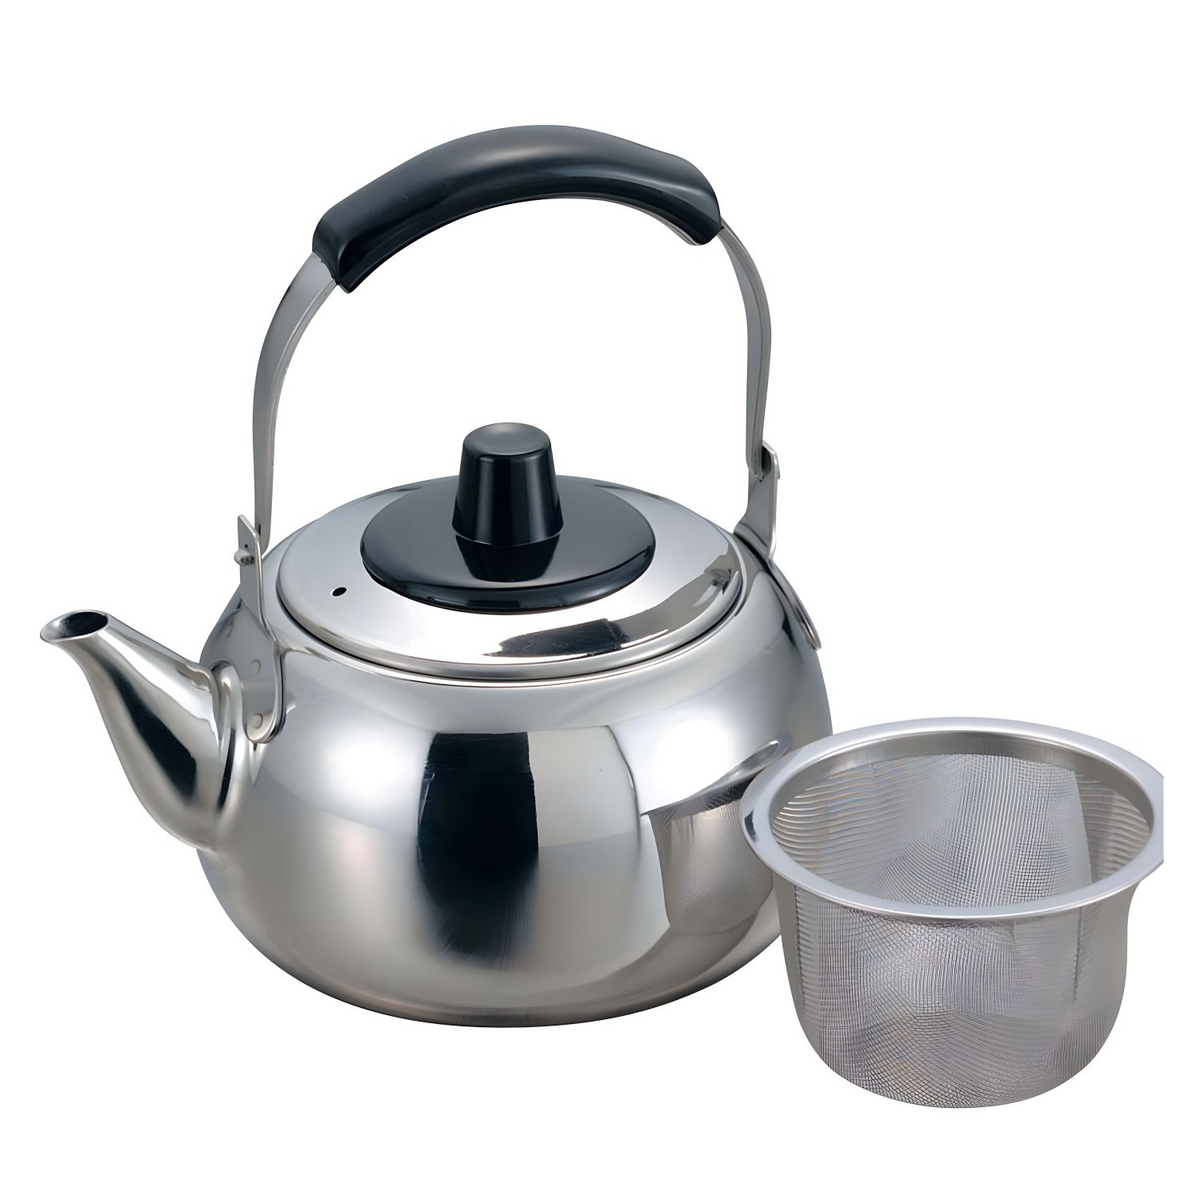 Takei-Kibutsu Stainless Steel Steel Kyusu Teapot with Tea Strainer